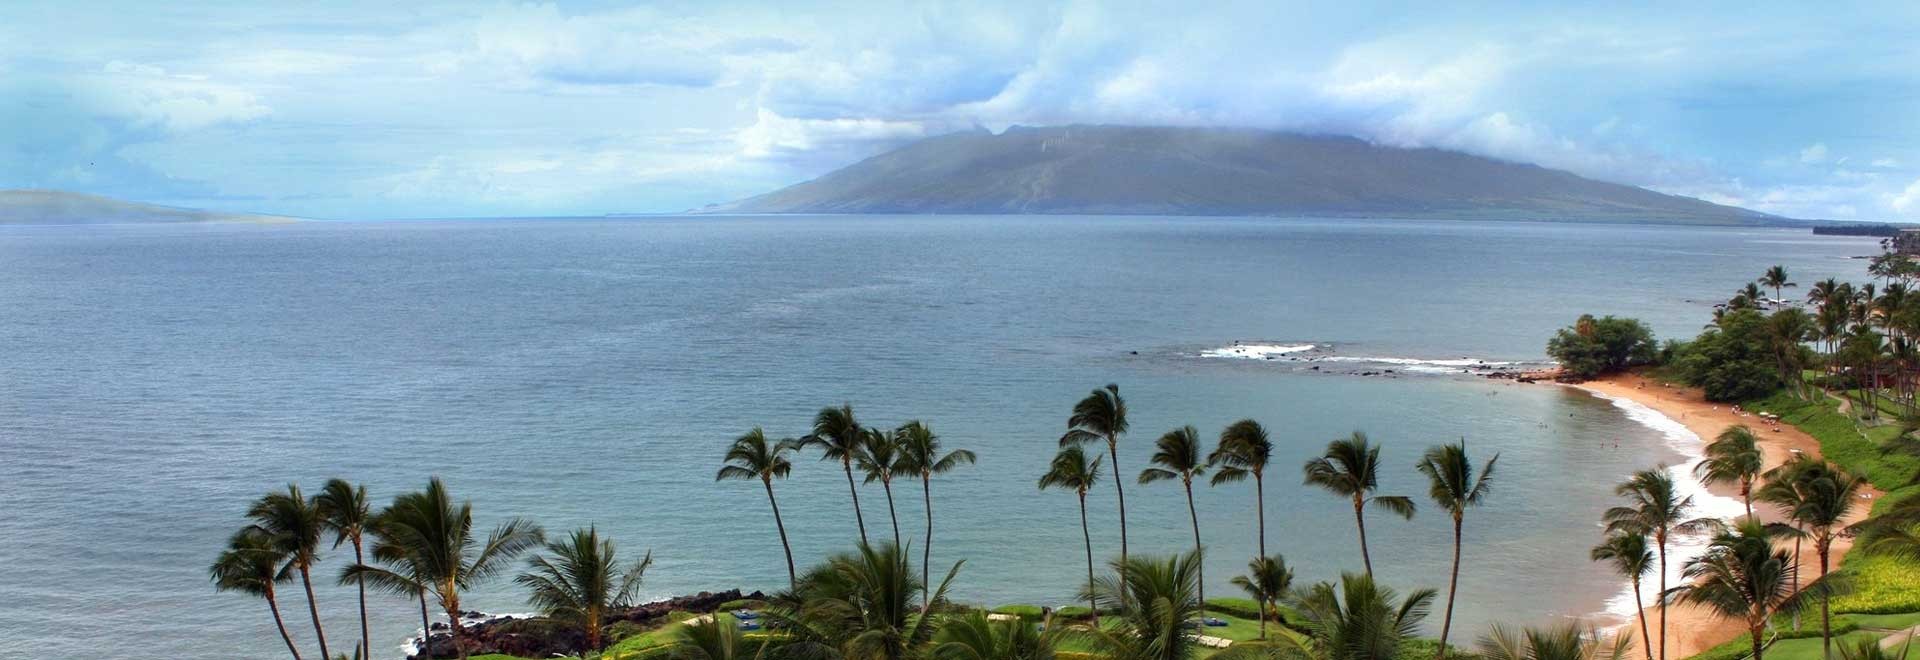 Wailea Beach Resort - Marriot, Maui, Hawaii - Book. Travel. Play.